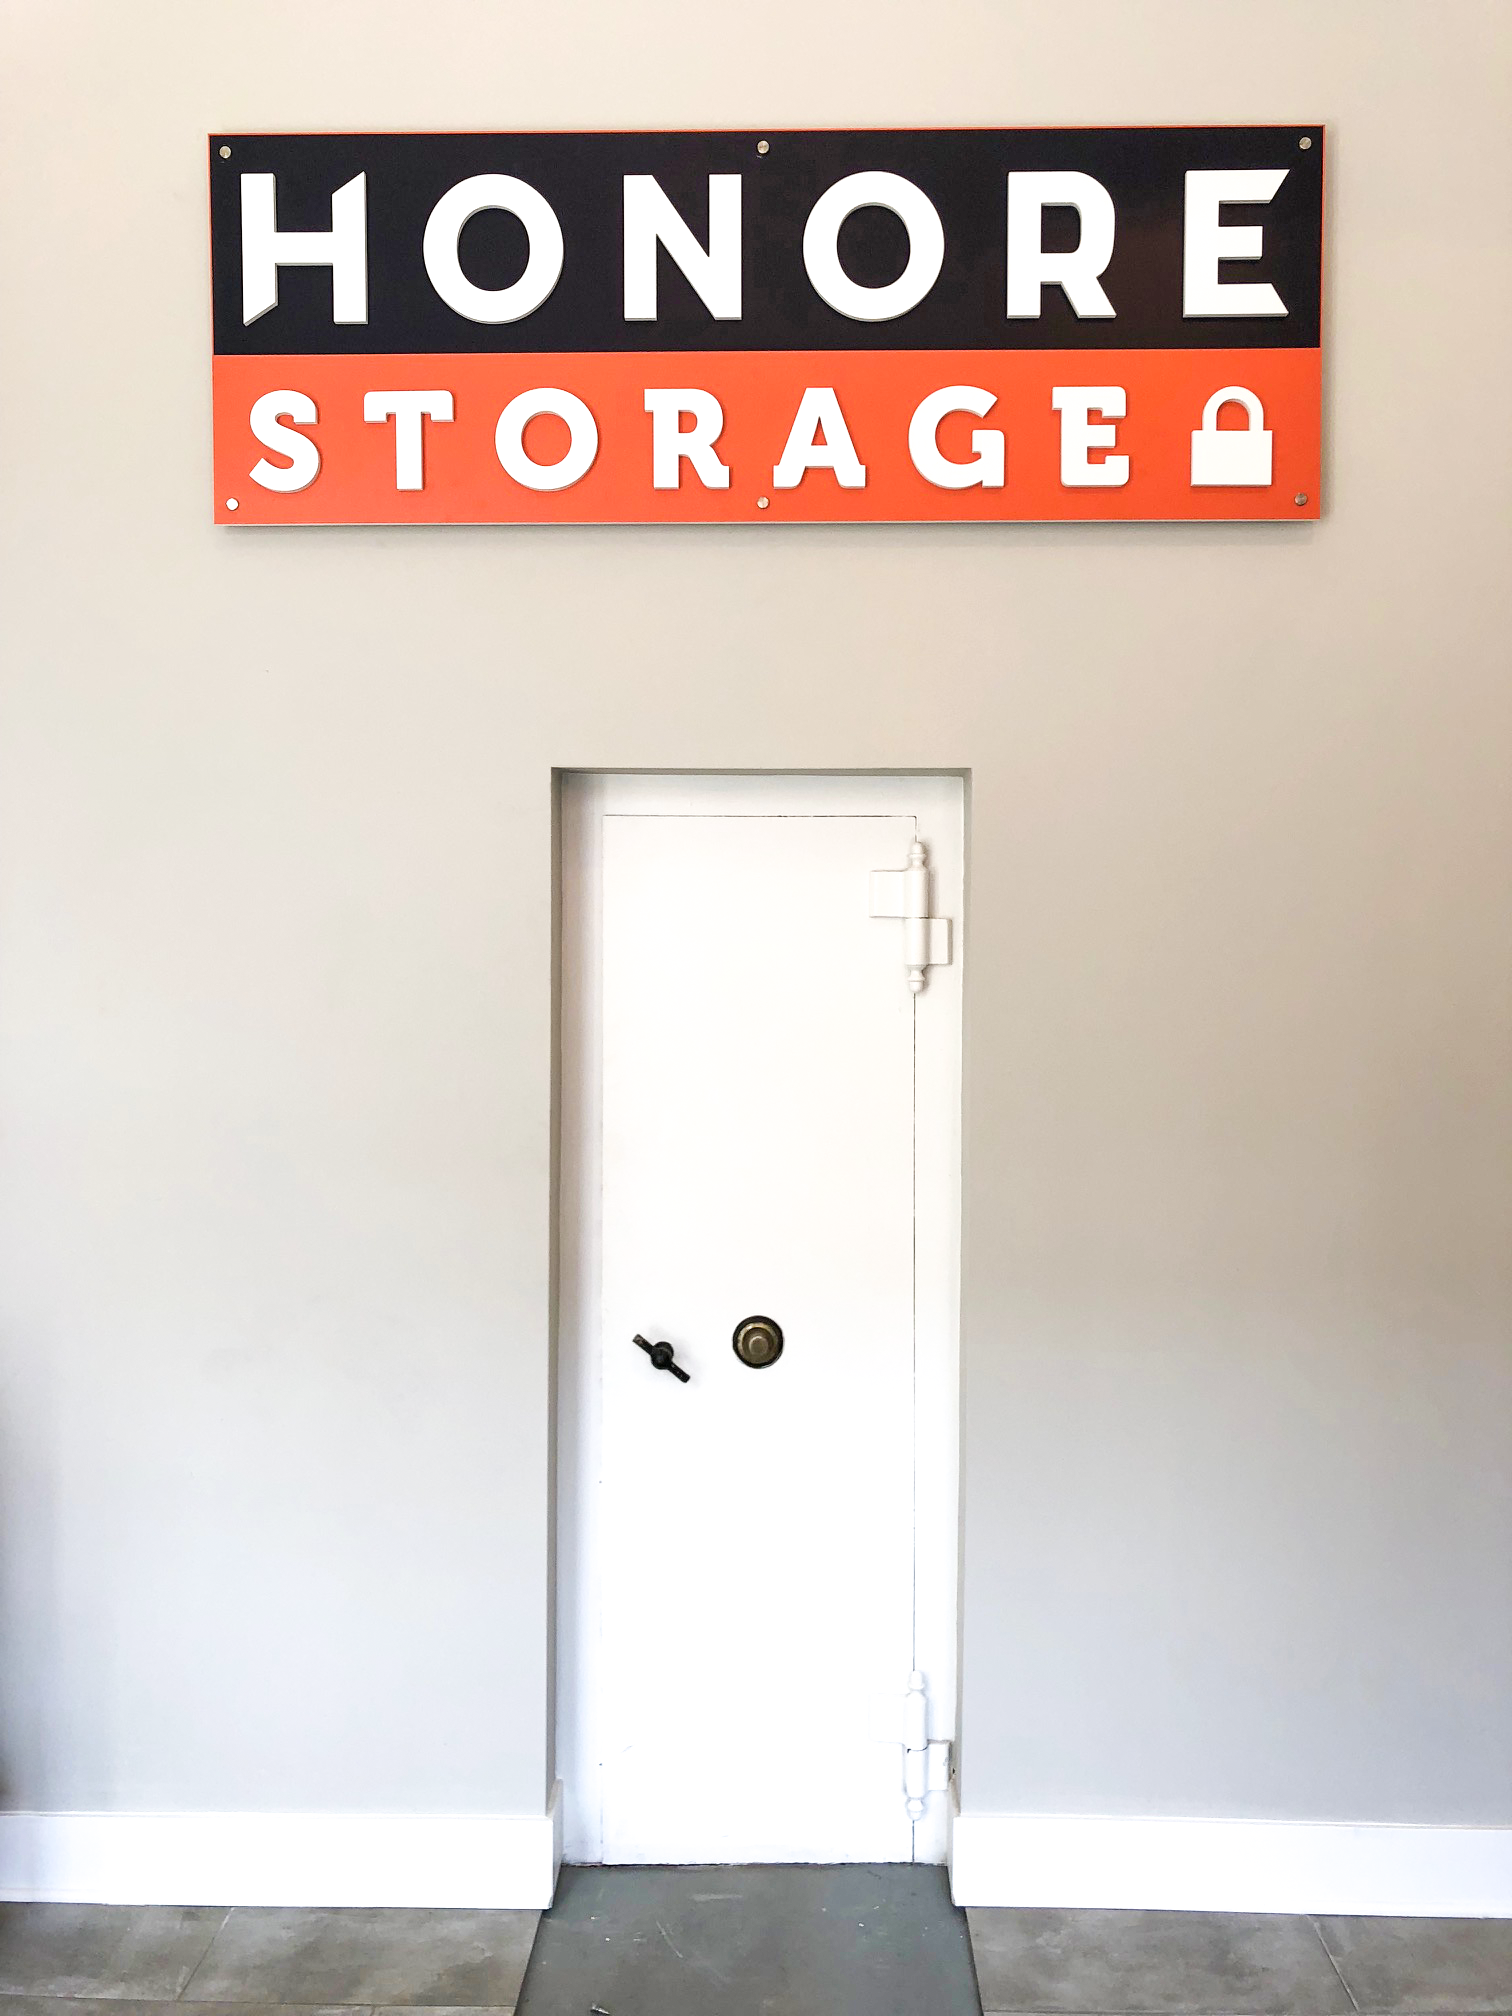 Honore Storage signage